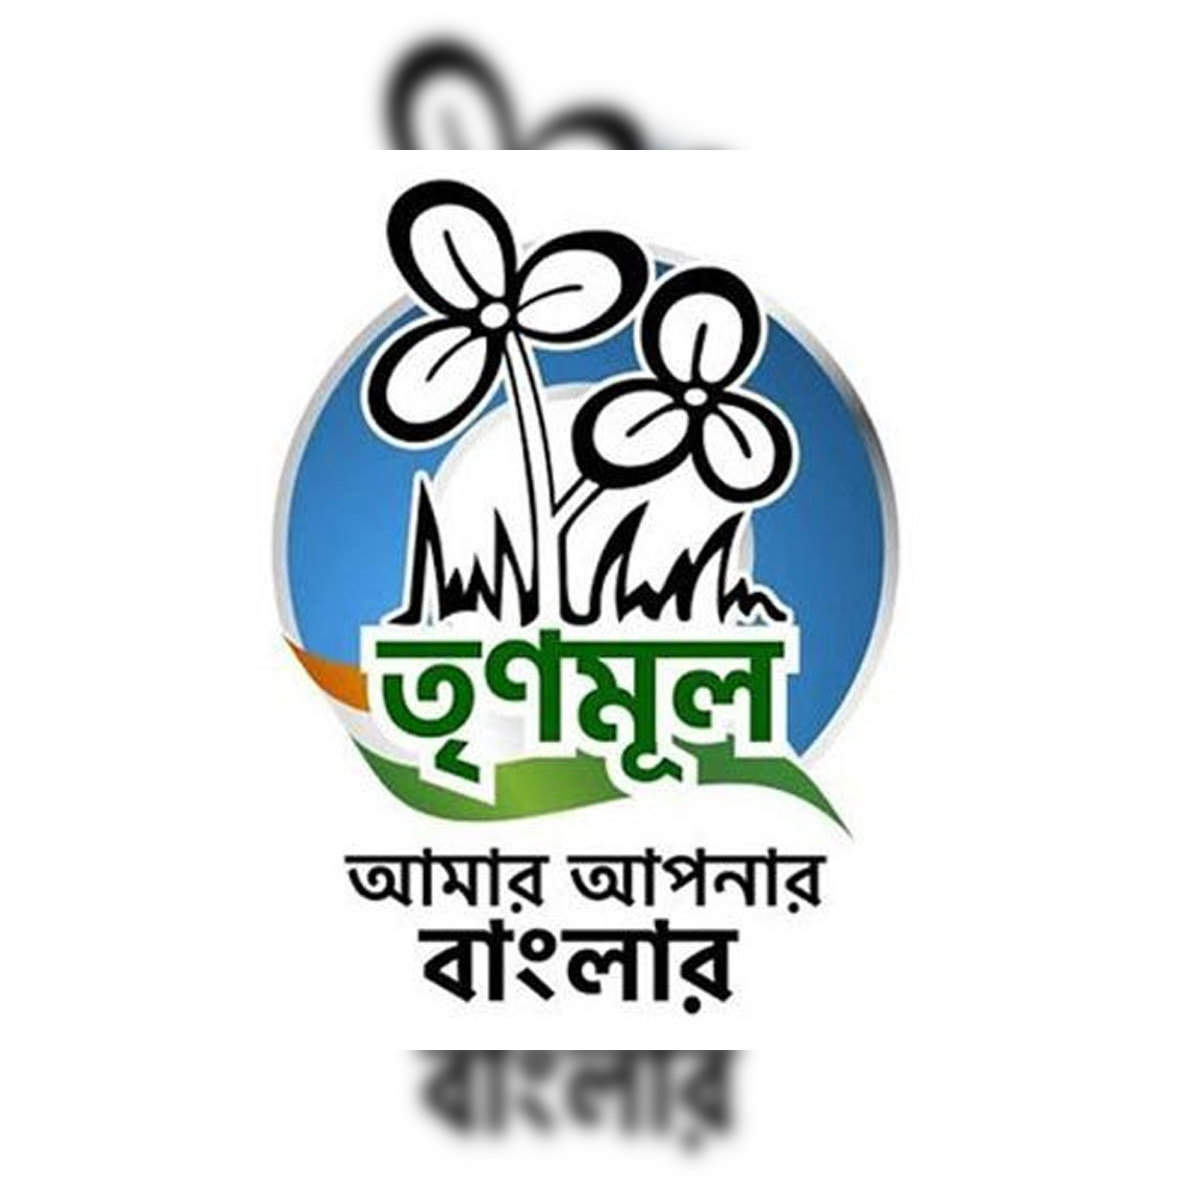 Hooghly West Bengal Kanyashree Biswa Bangla Logo In Saree | Hooghly : পুজোর  ফ্যাশনেও রাজ্যের প্রকল্প, হুগলিতে শাড়ি জুড়ে বিশ্ববাংলা বা কন্যাশ্রী